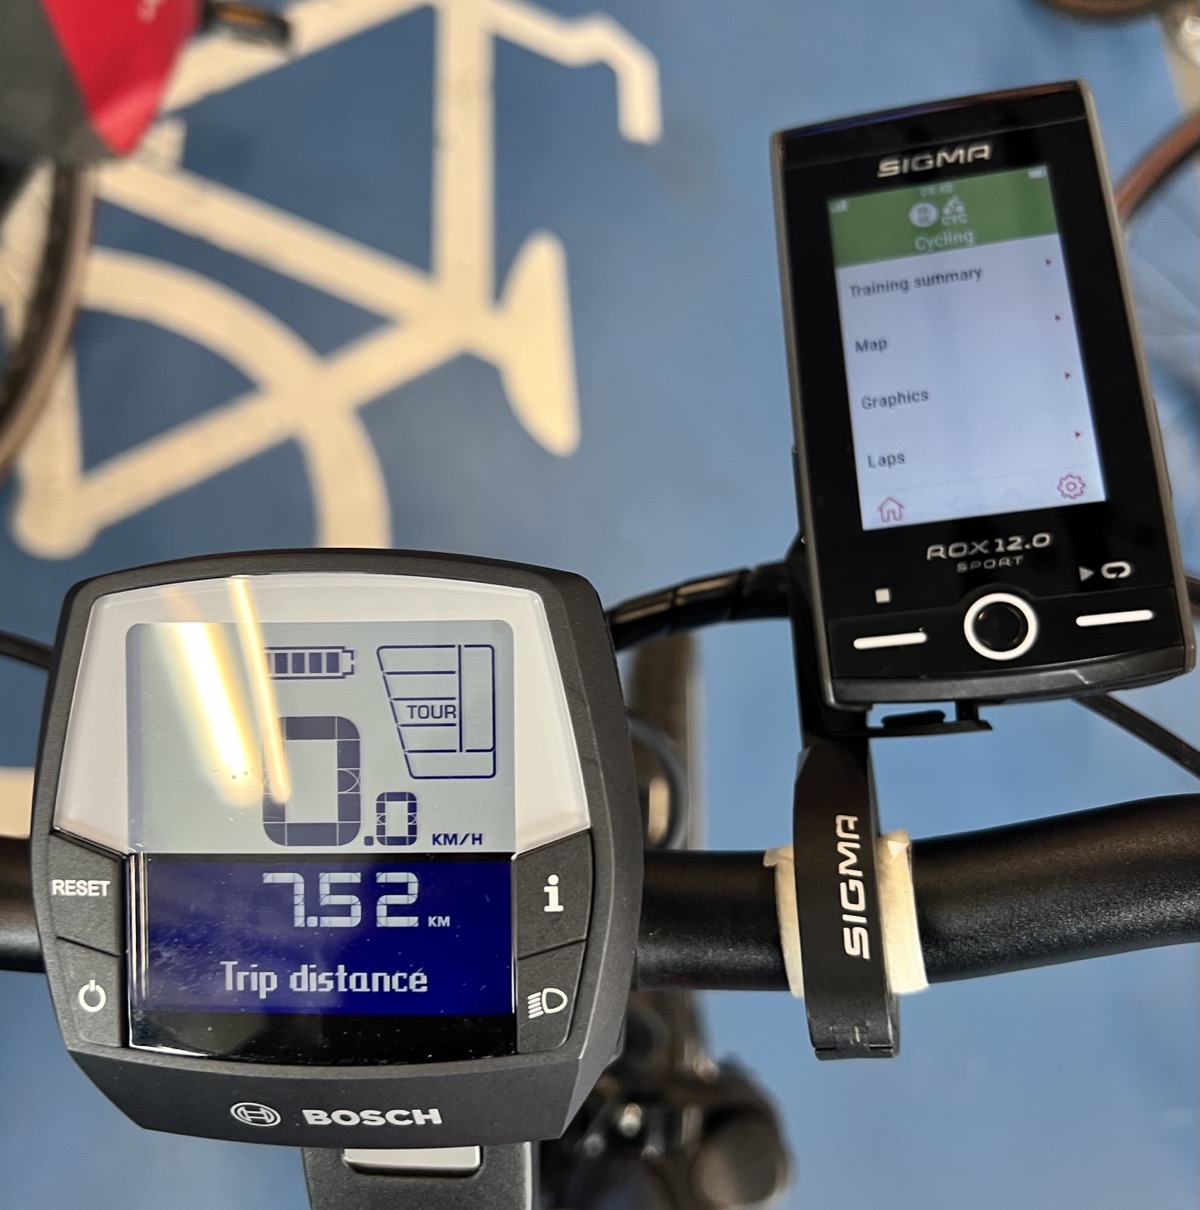 GPS and bike computer